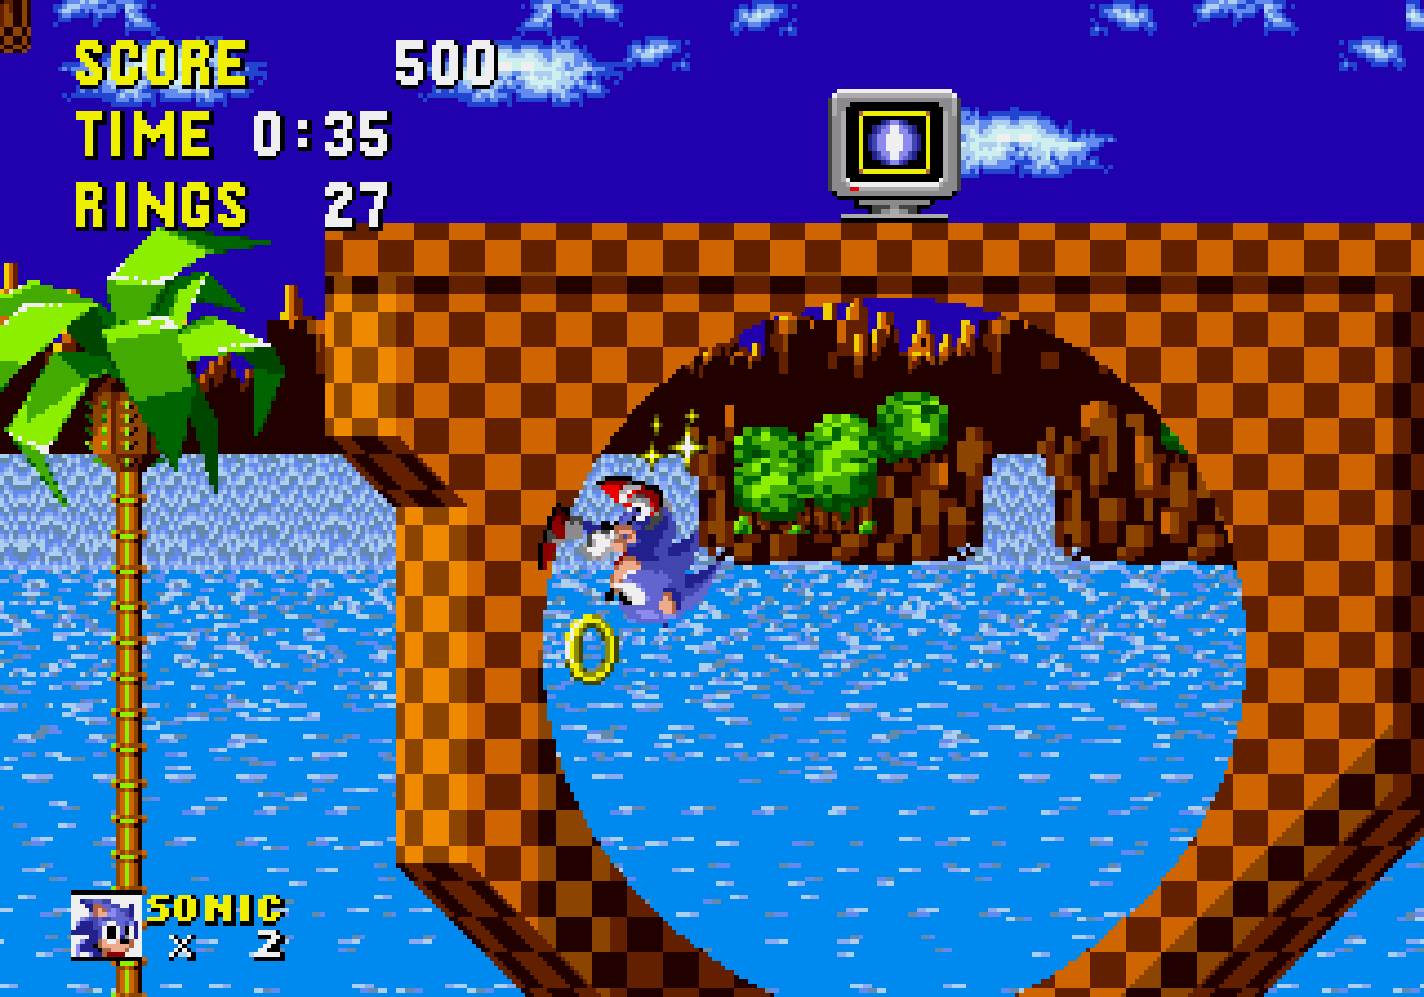 Sonic the Hedgehog Genesis (Nintendo Game Boy Advance) - Green Hill Zone 